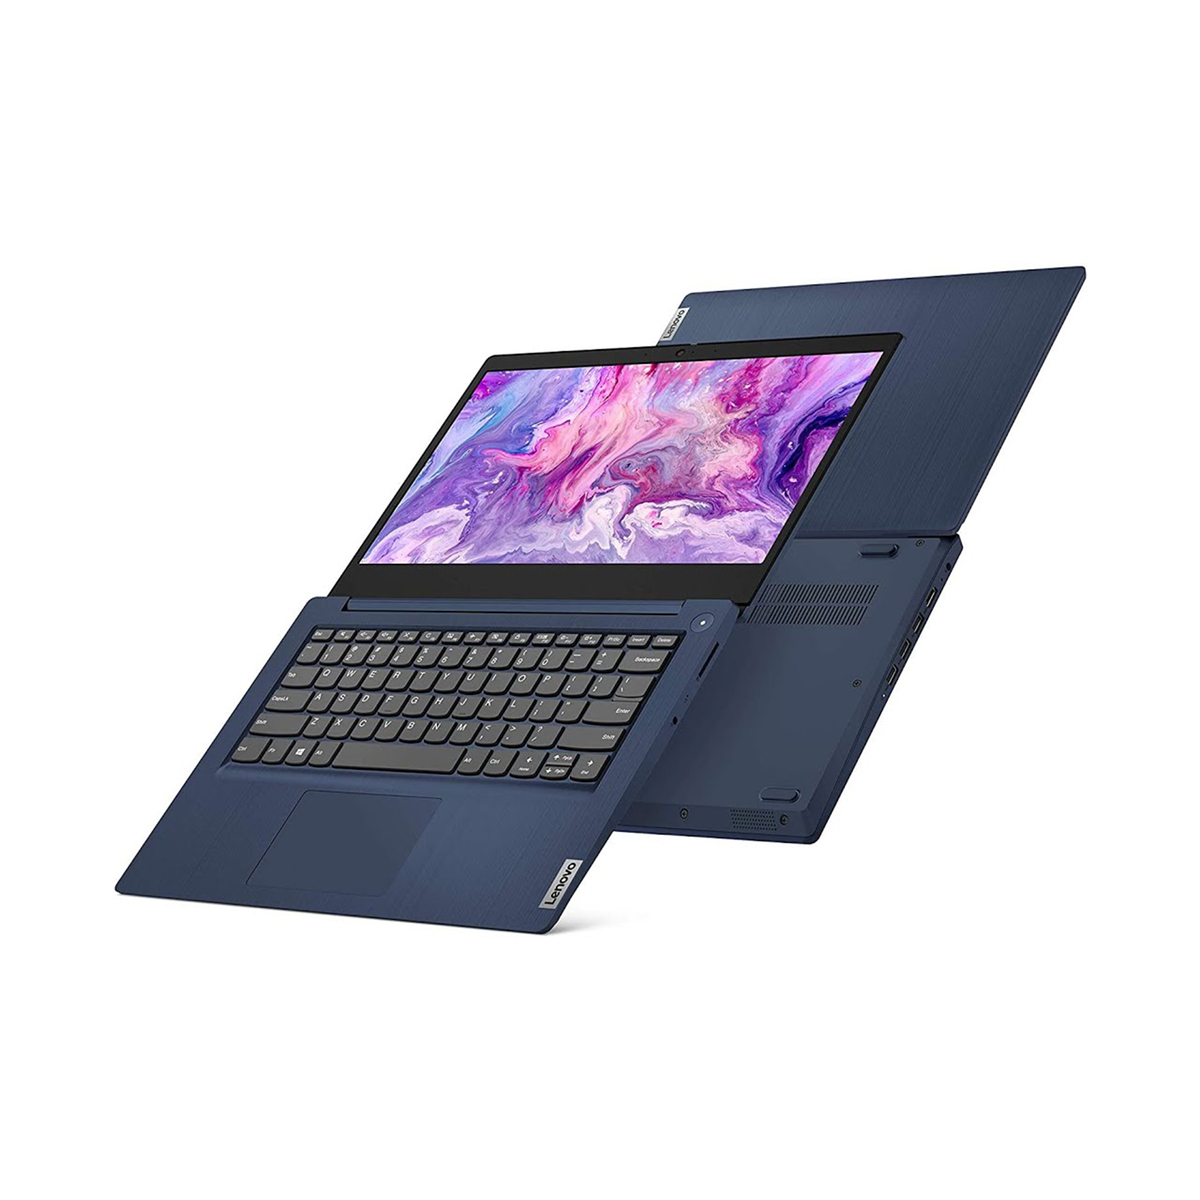 Lenovo IdeaPad 3 15IML05 (81WB000YAX) Core i5-10210U,8GB RAM, 1TB HDD,128GB SSD, MX330 2GB, 15.6" FHD, Windows 10 ,Blue